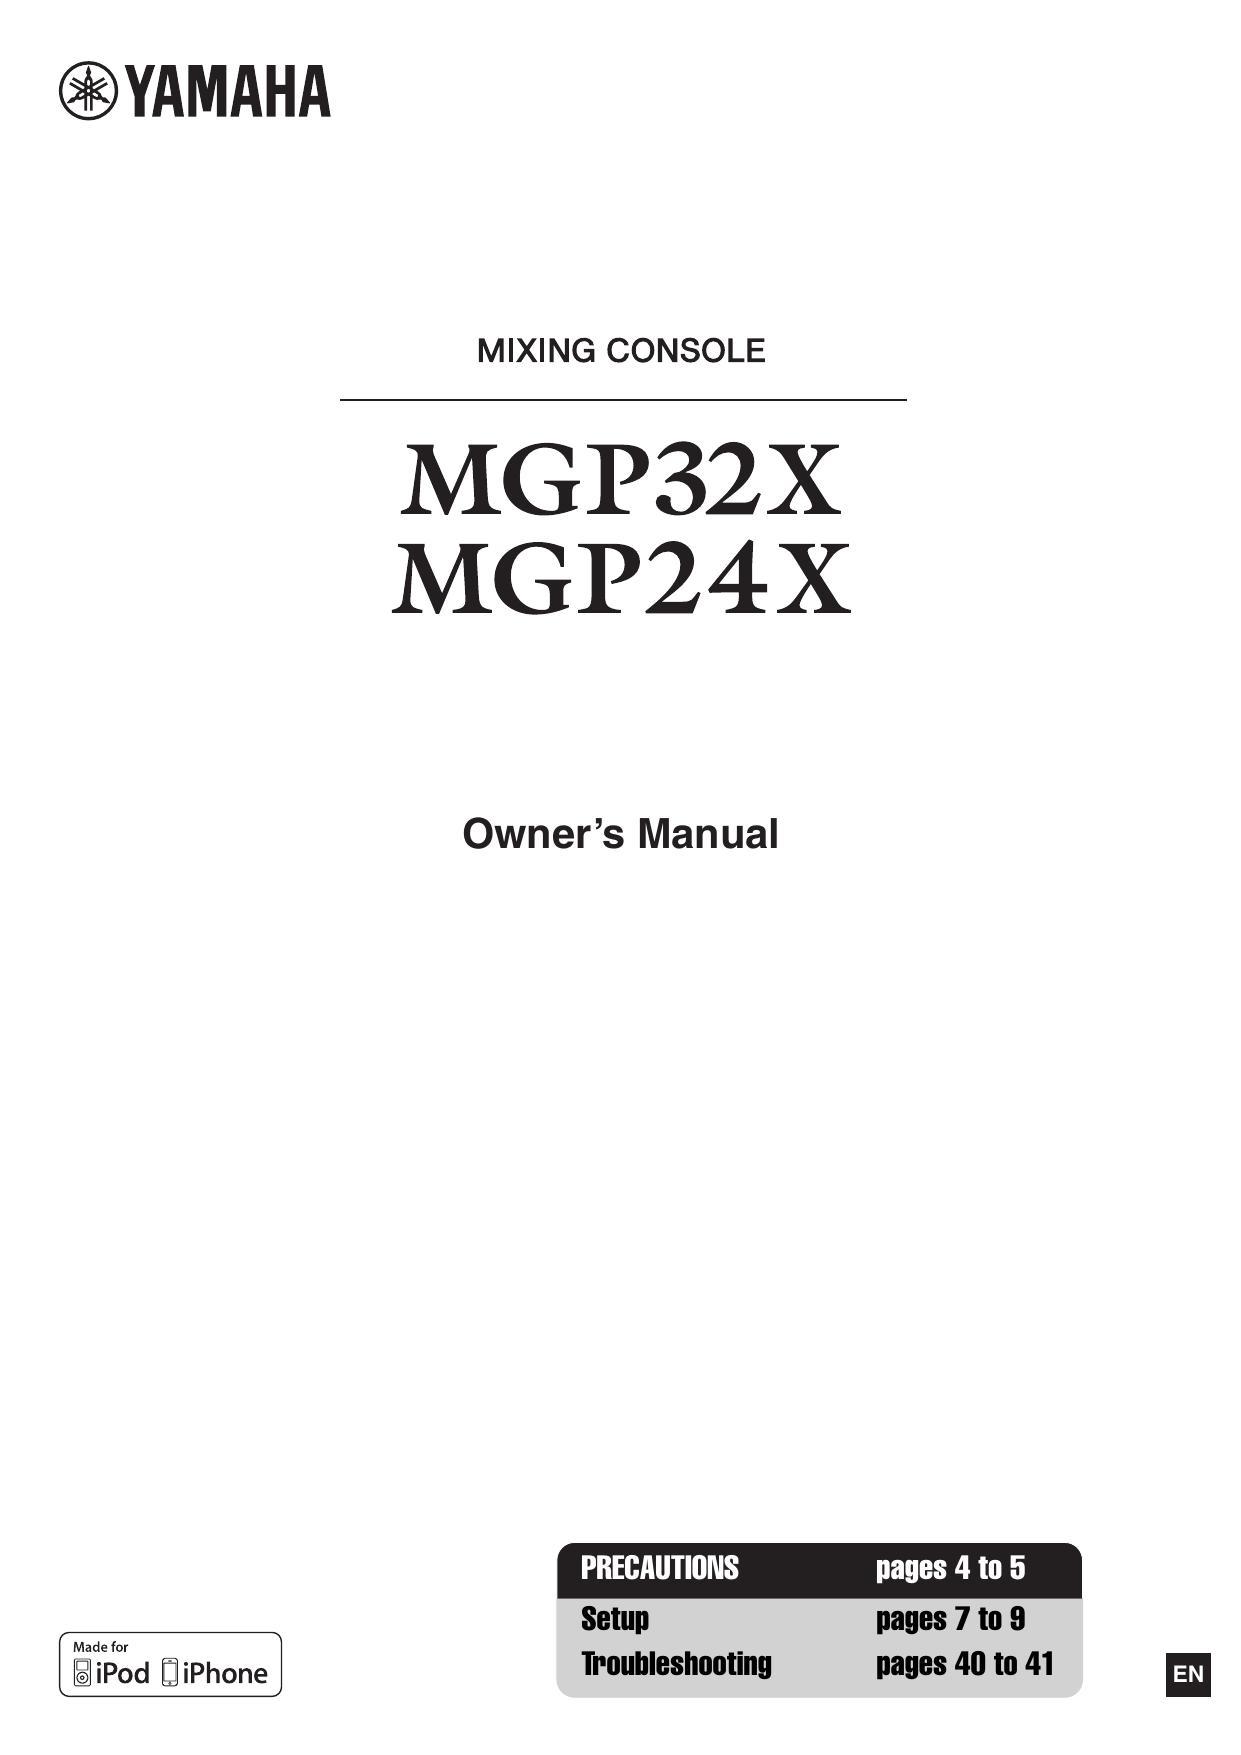 mgp32xmgp24x-owners-manual.pdf